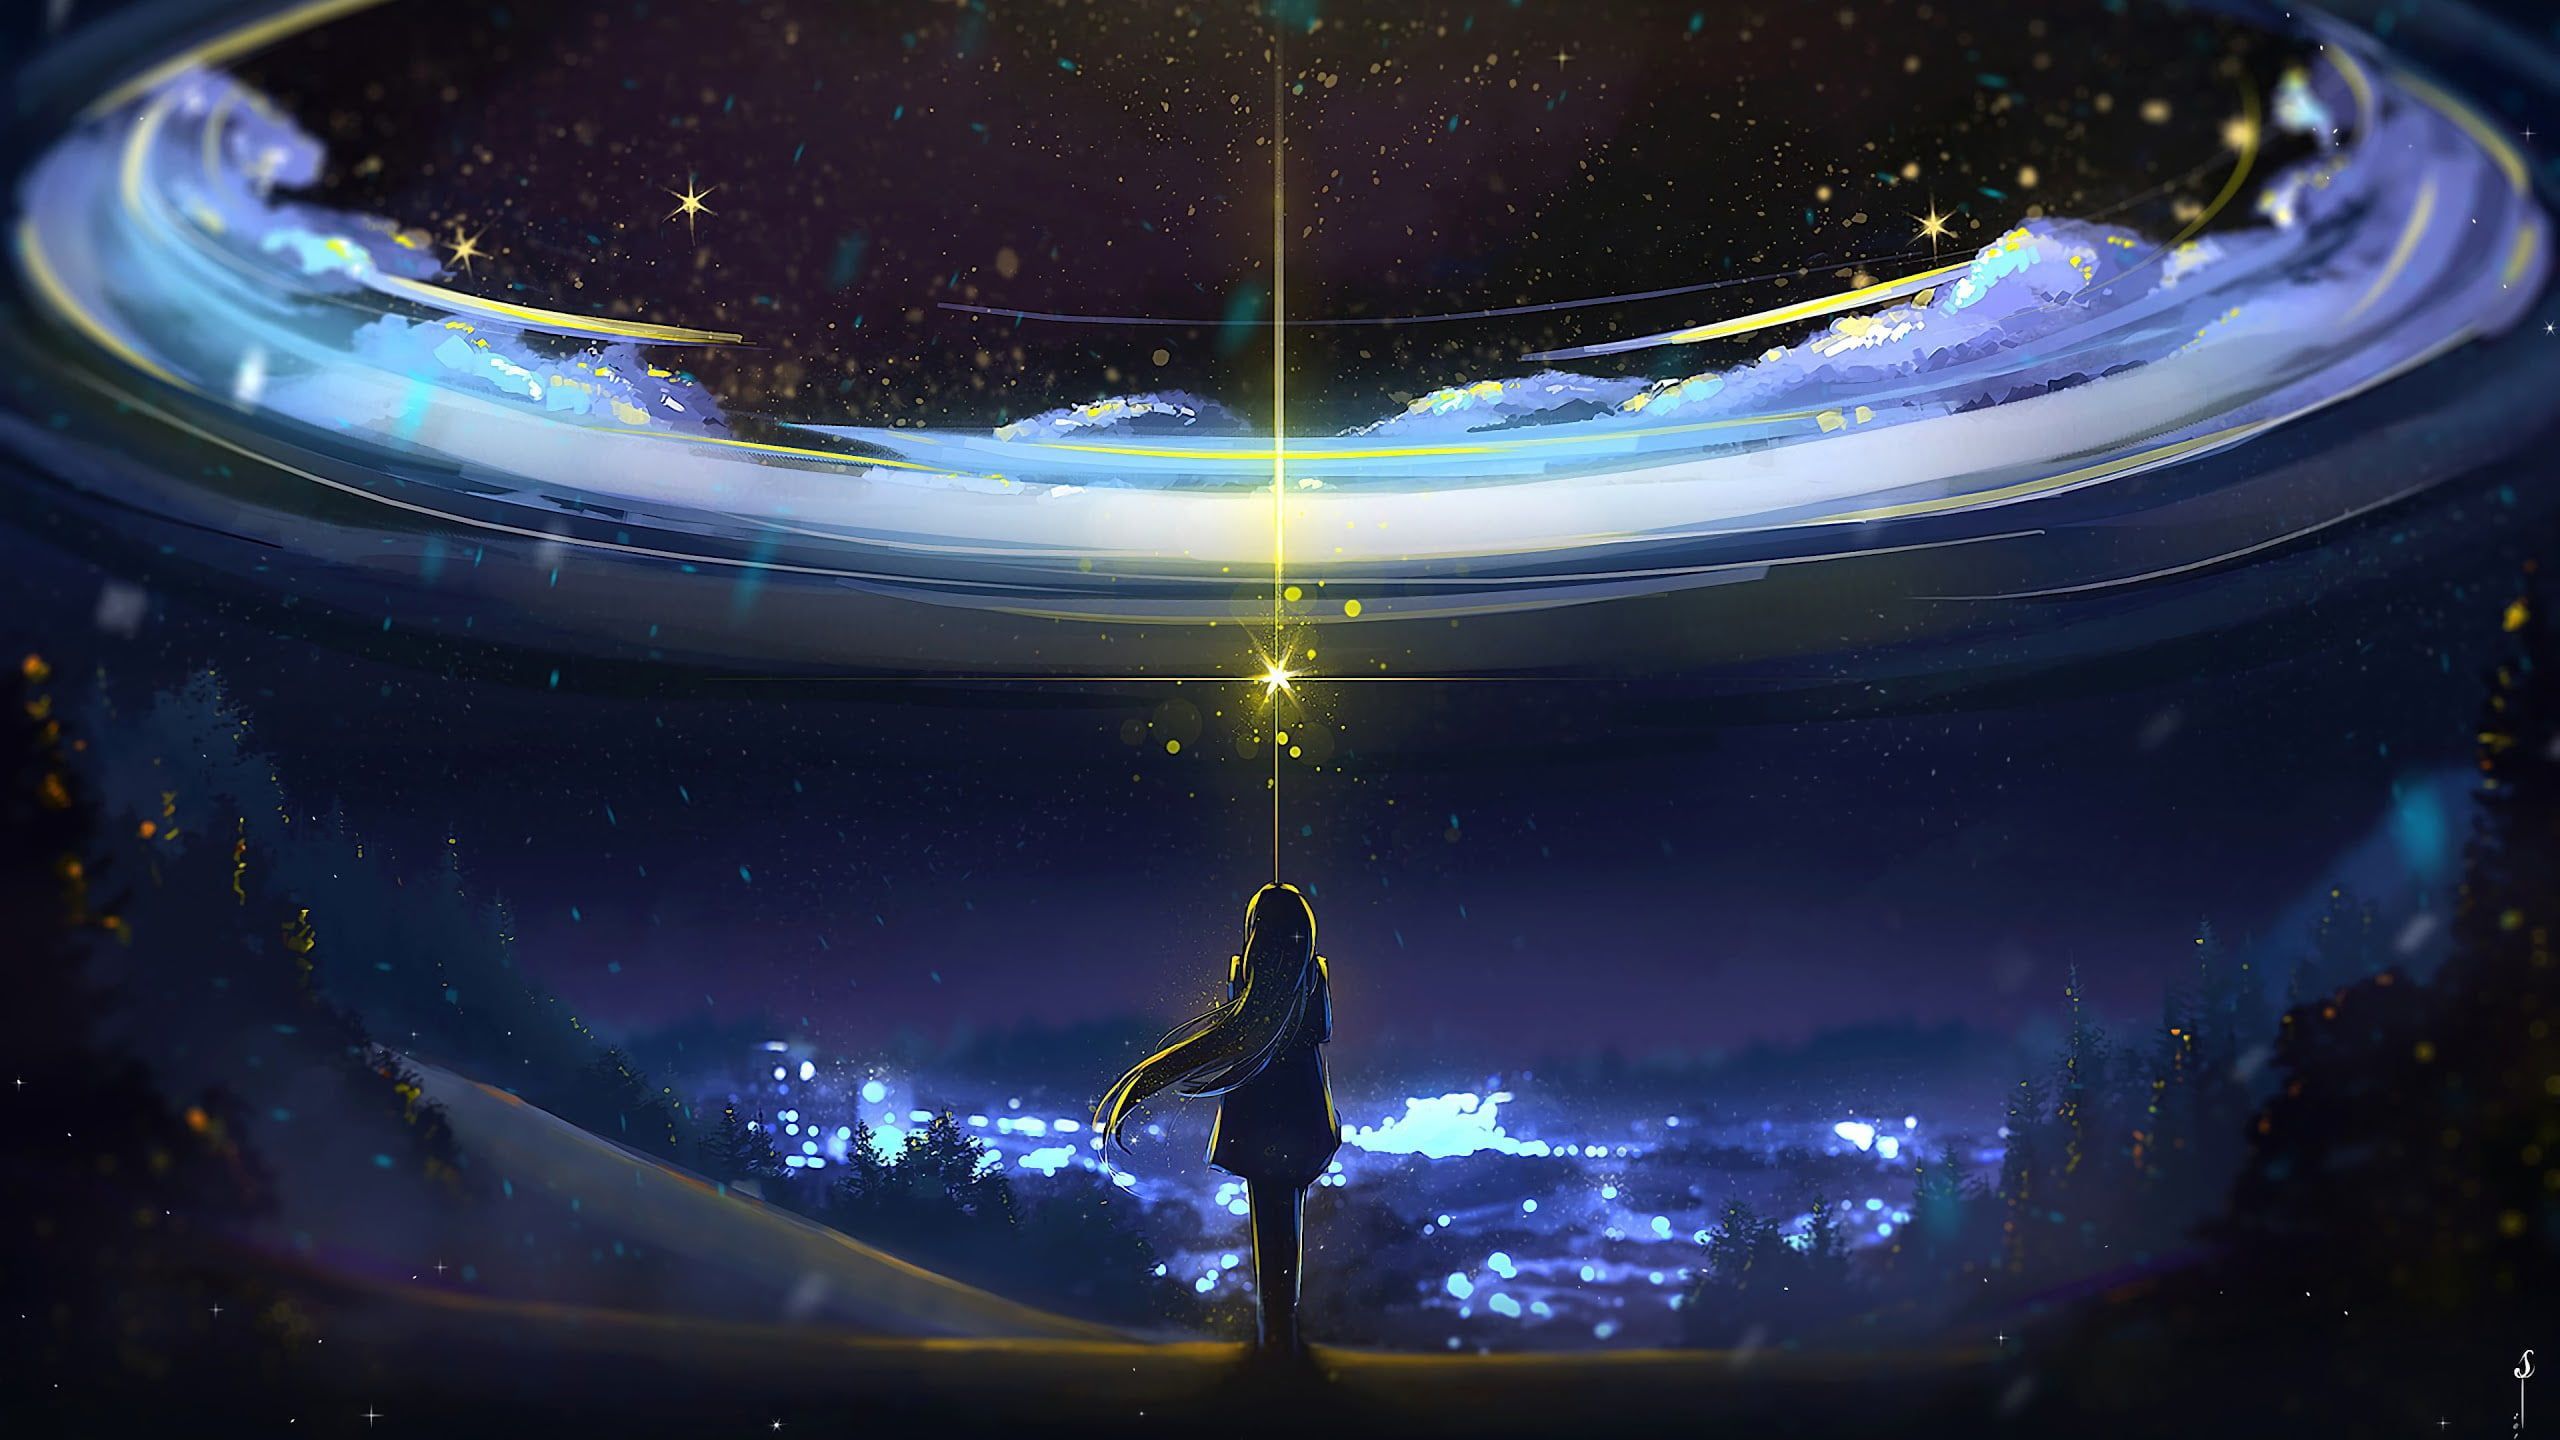 Sky #Anime #Night #Scenery K #wallpaper #hdwallpaper #desktop. Sky anime, Anime scenery, Anime scenery wallpaper